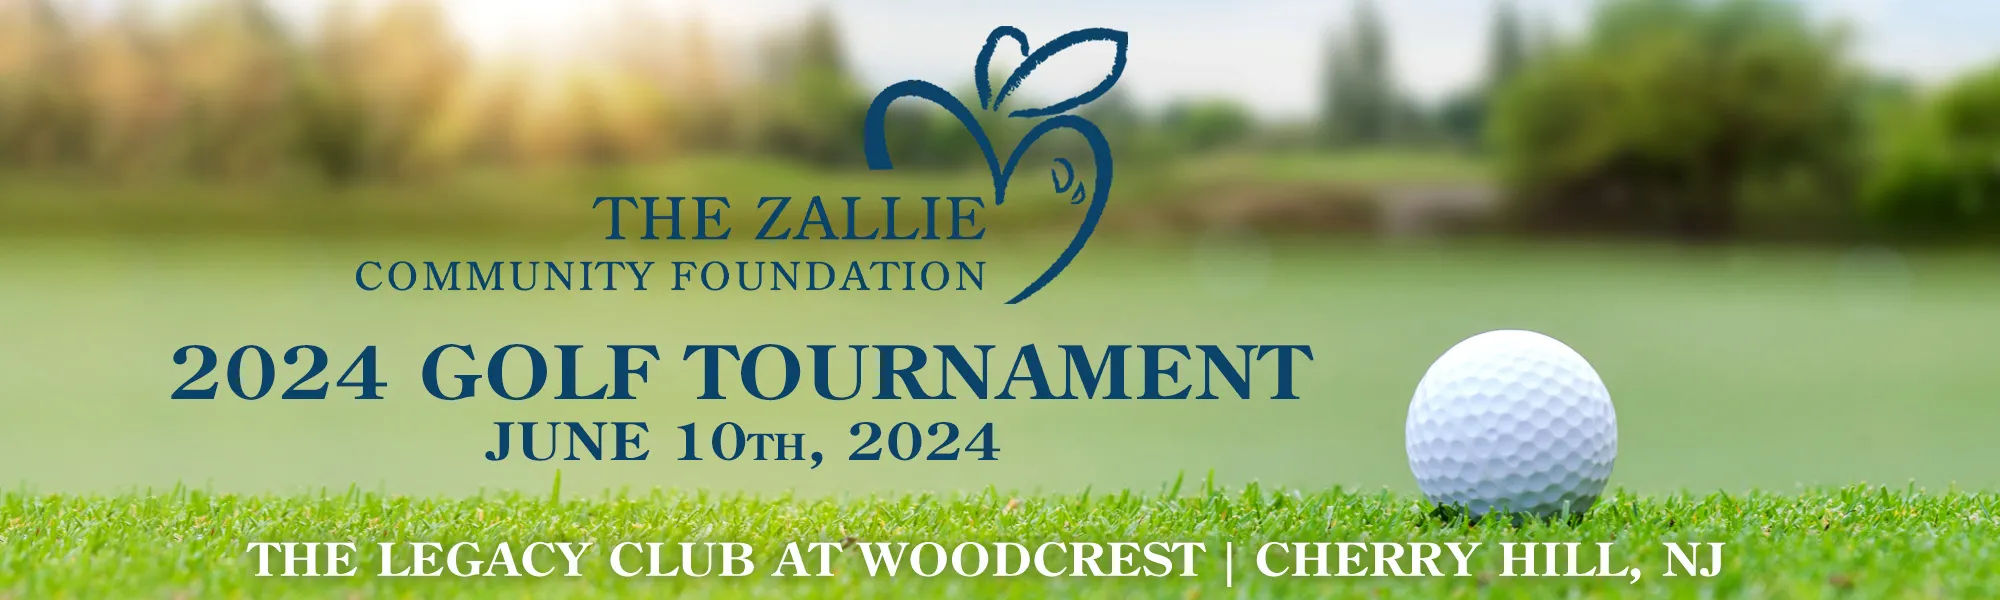 2024 Golf Tournament 